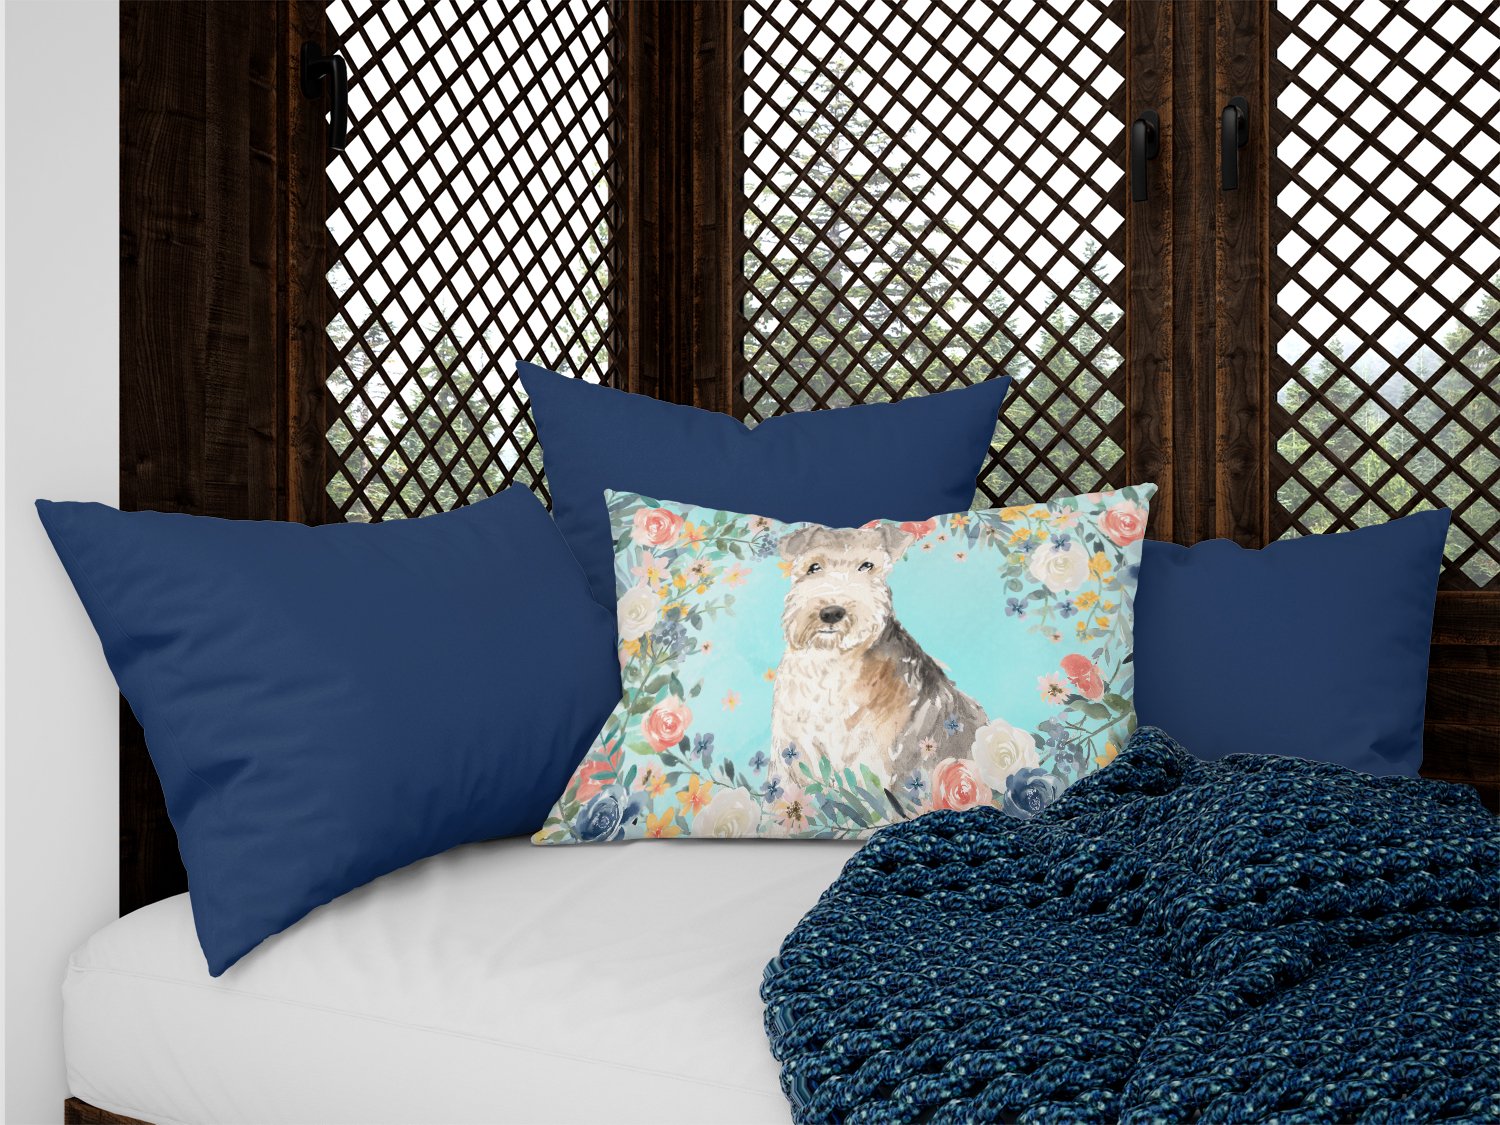 Lakeland Terrier Canvas Fabric Decorative Pillow CK3420PW1216 by Caroline's Treasures